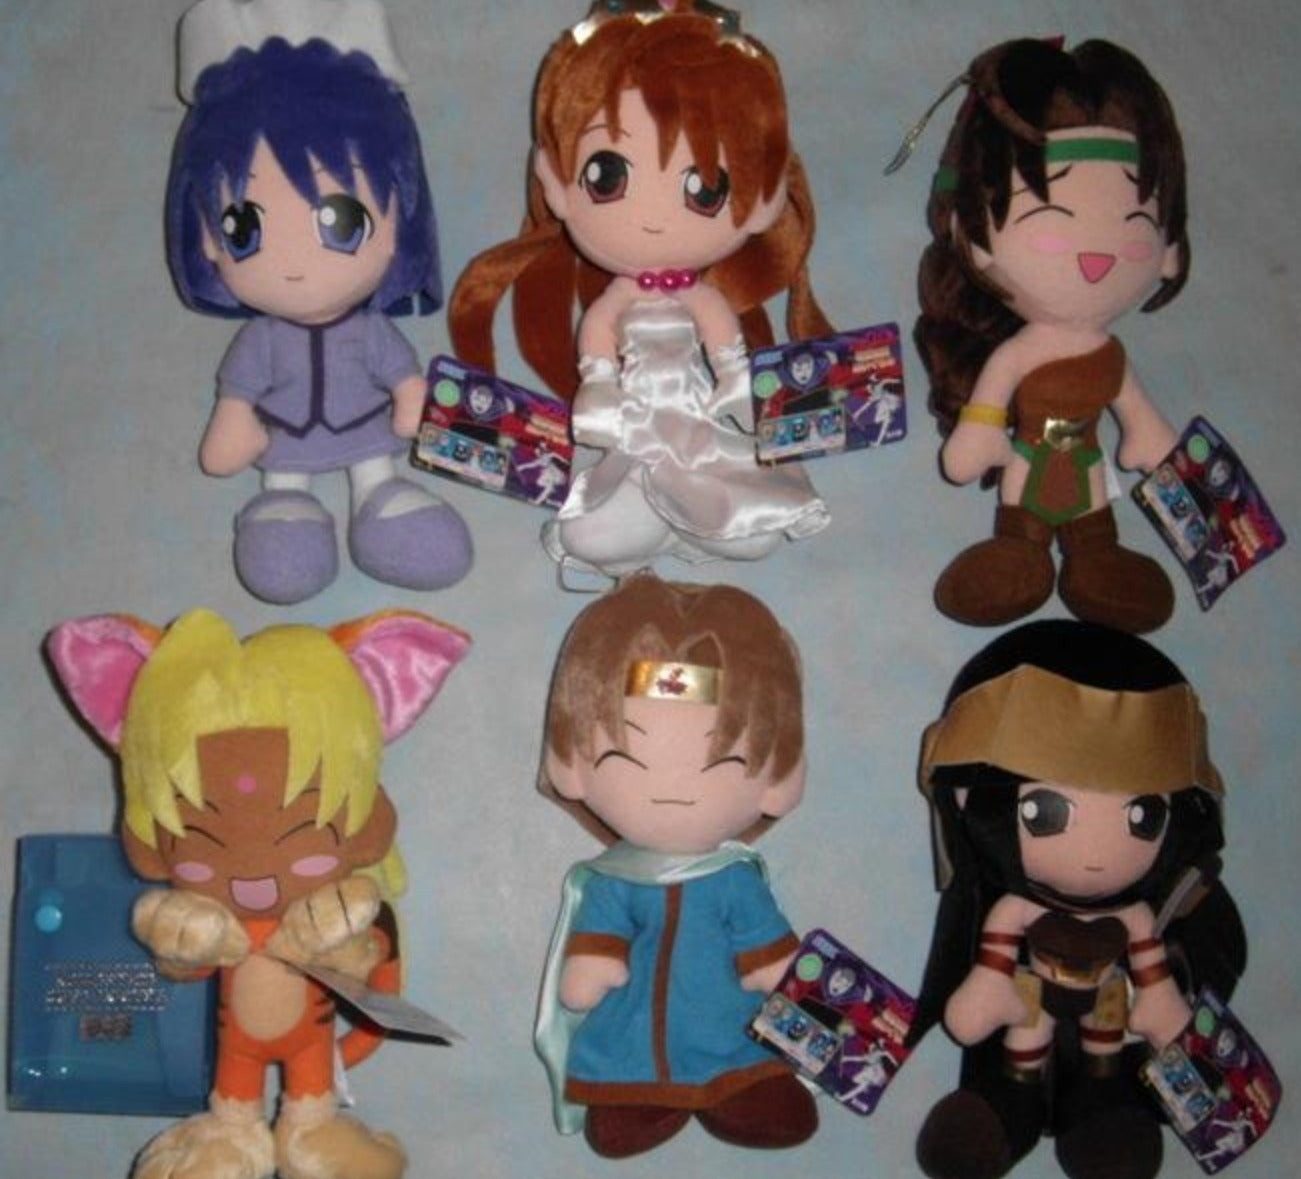 Sega Prize Love Hina 6 Dragon Palace Legends ver Plush Doll Collection Figure Set